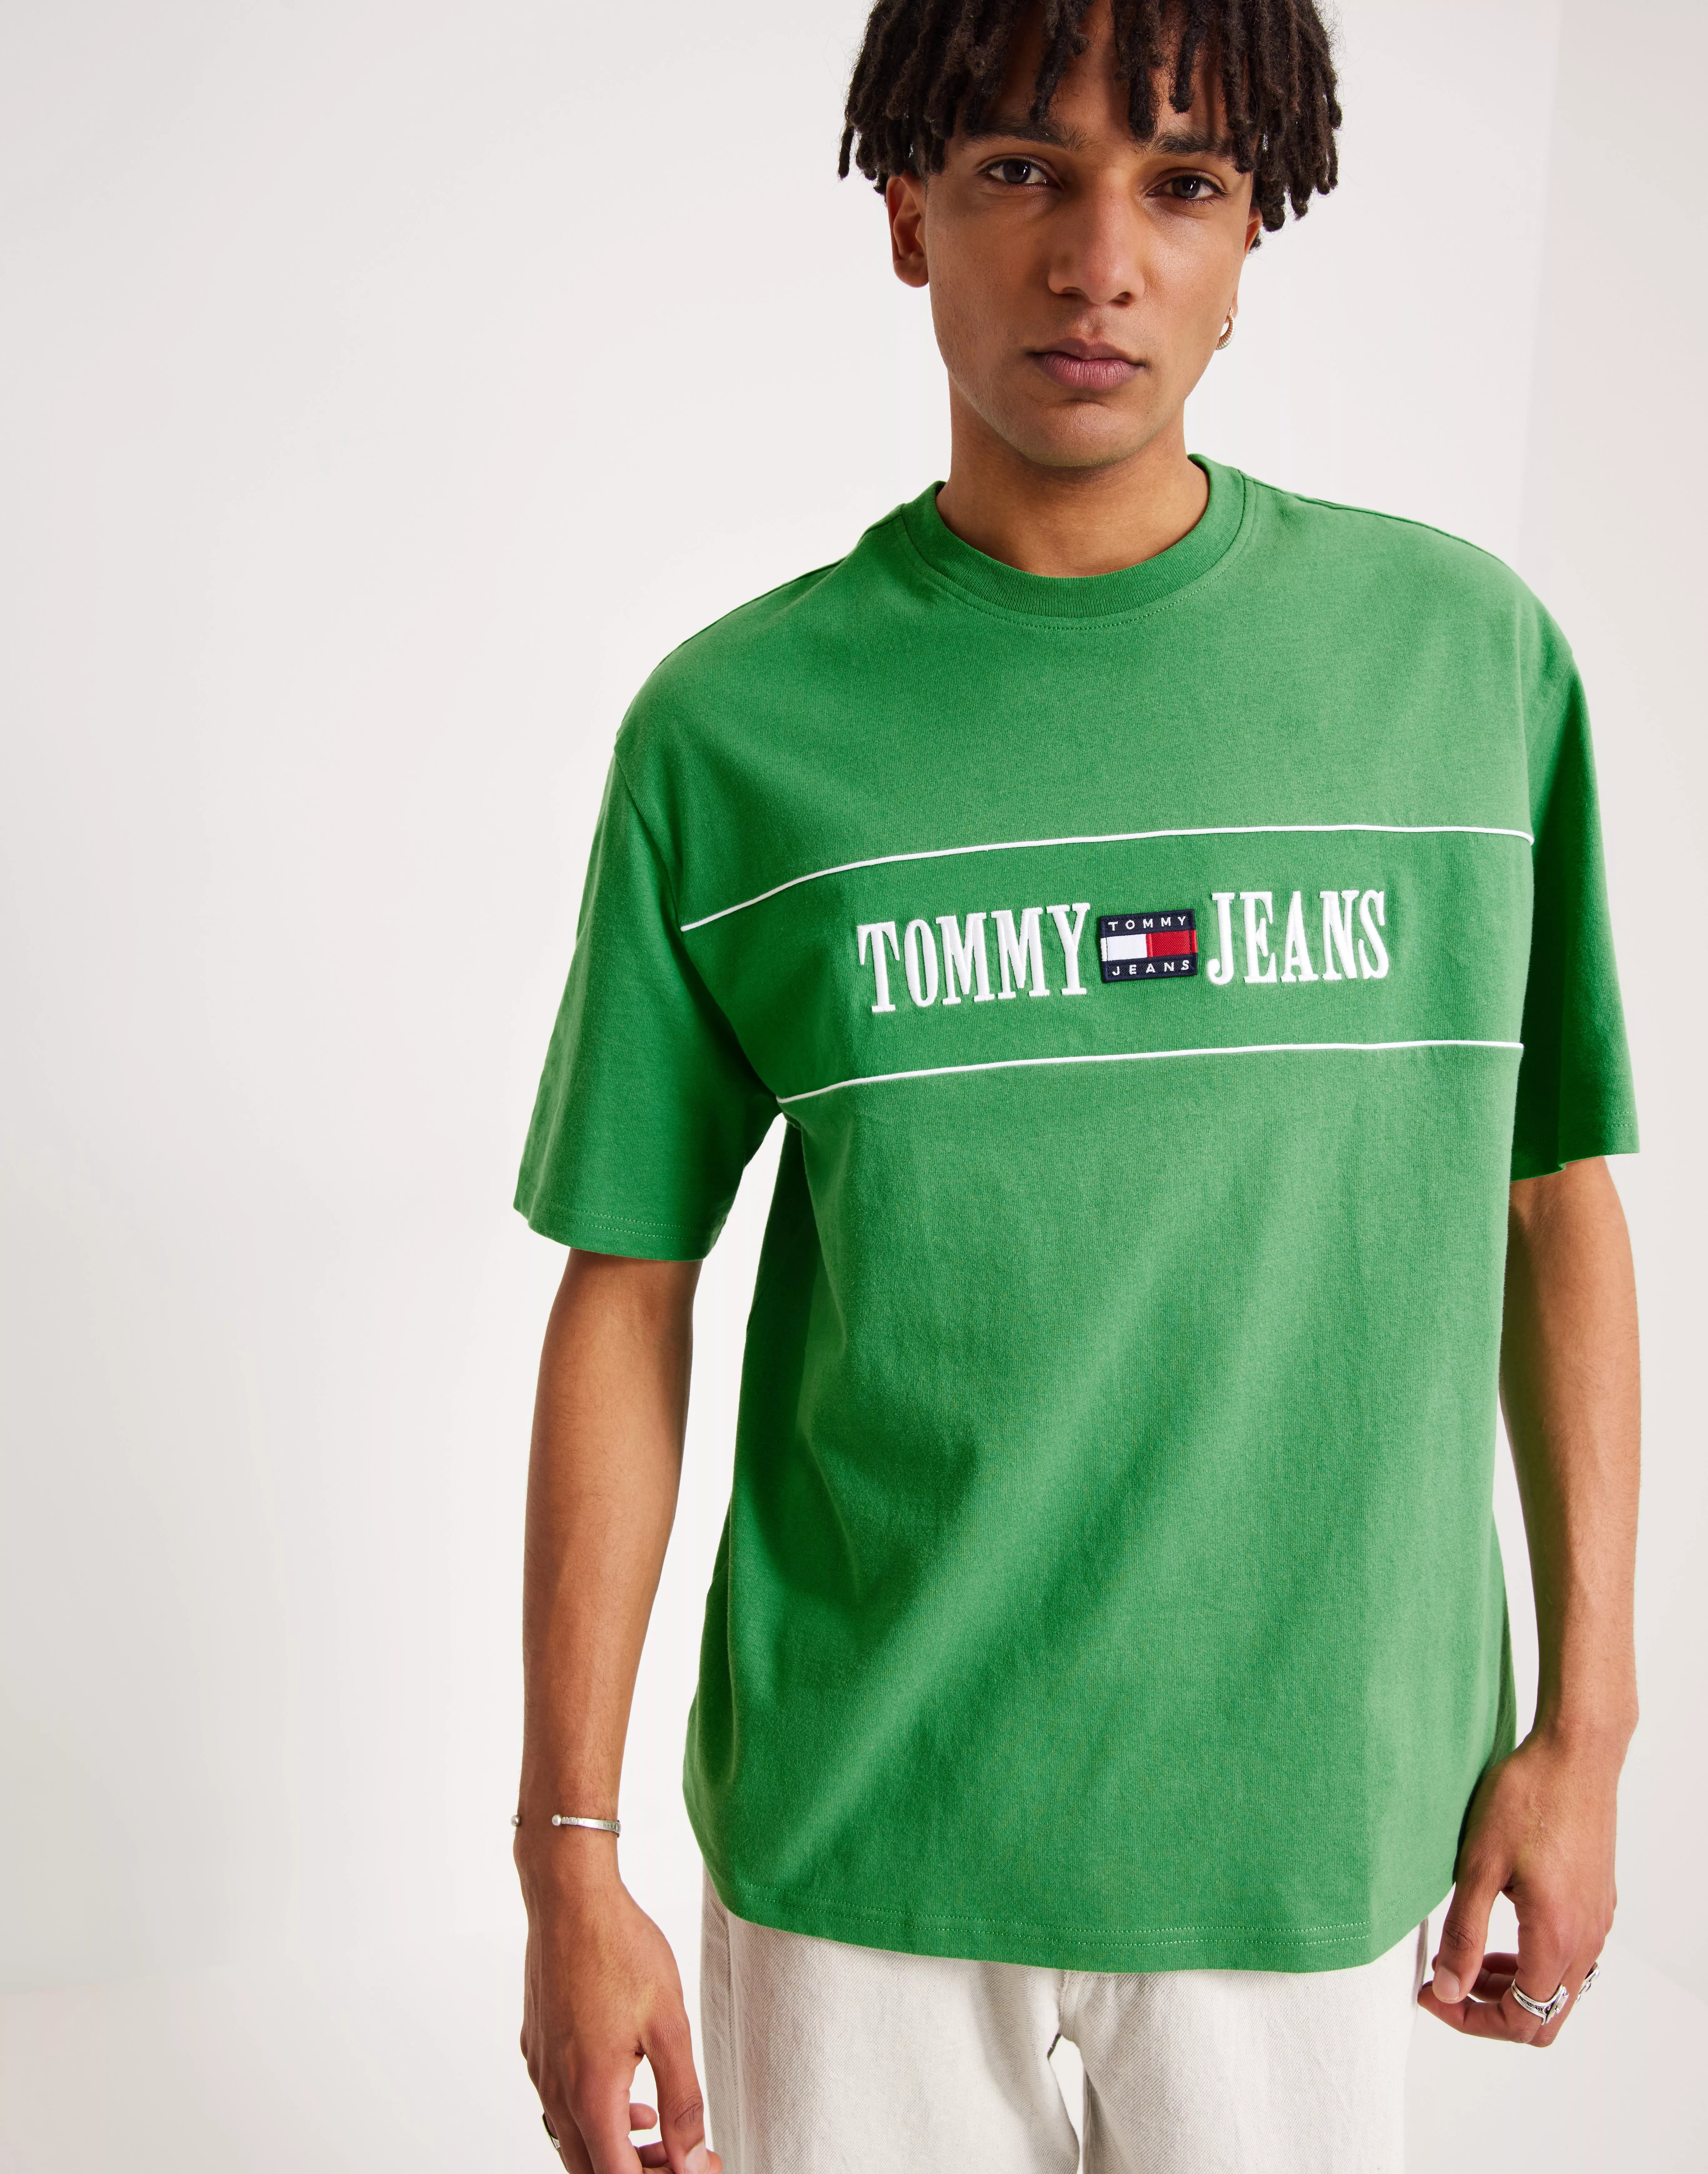 ARCHIVE Tommy Coastal NLYMAN TJM Jeans Buy SKATE Green TEE - |